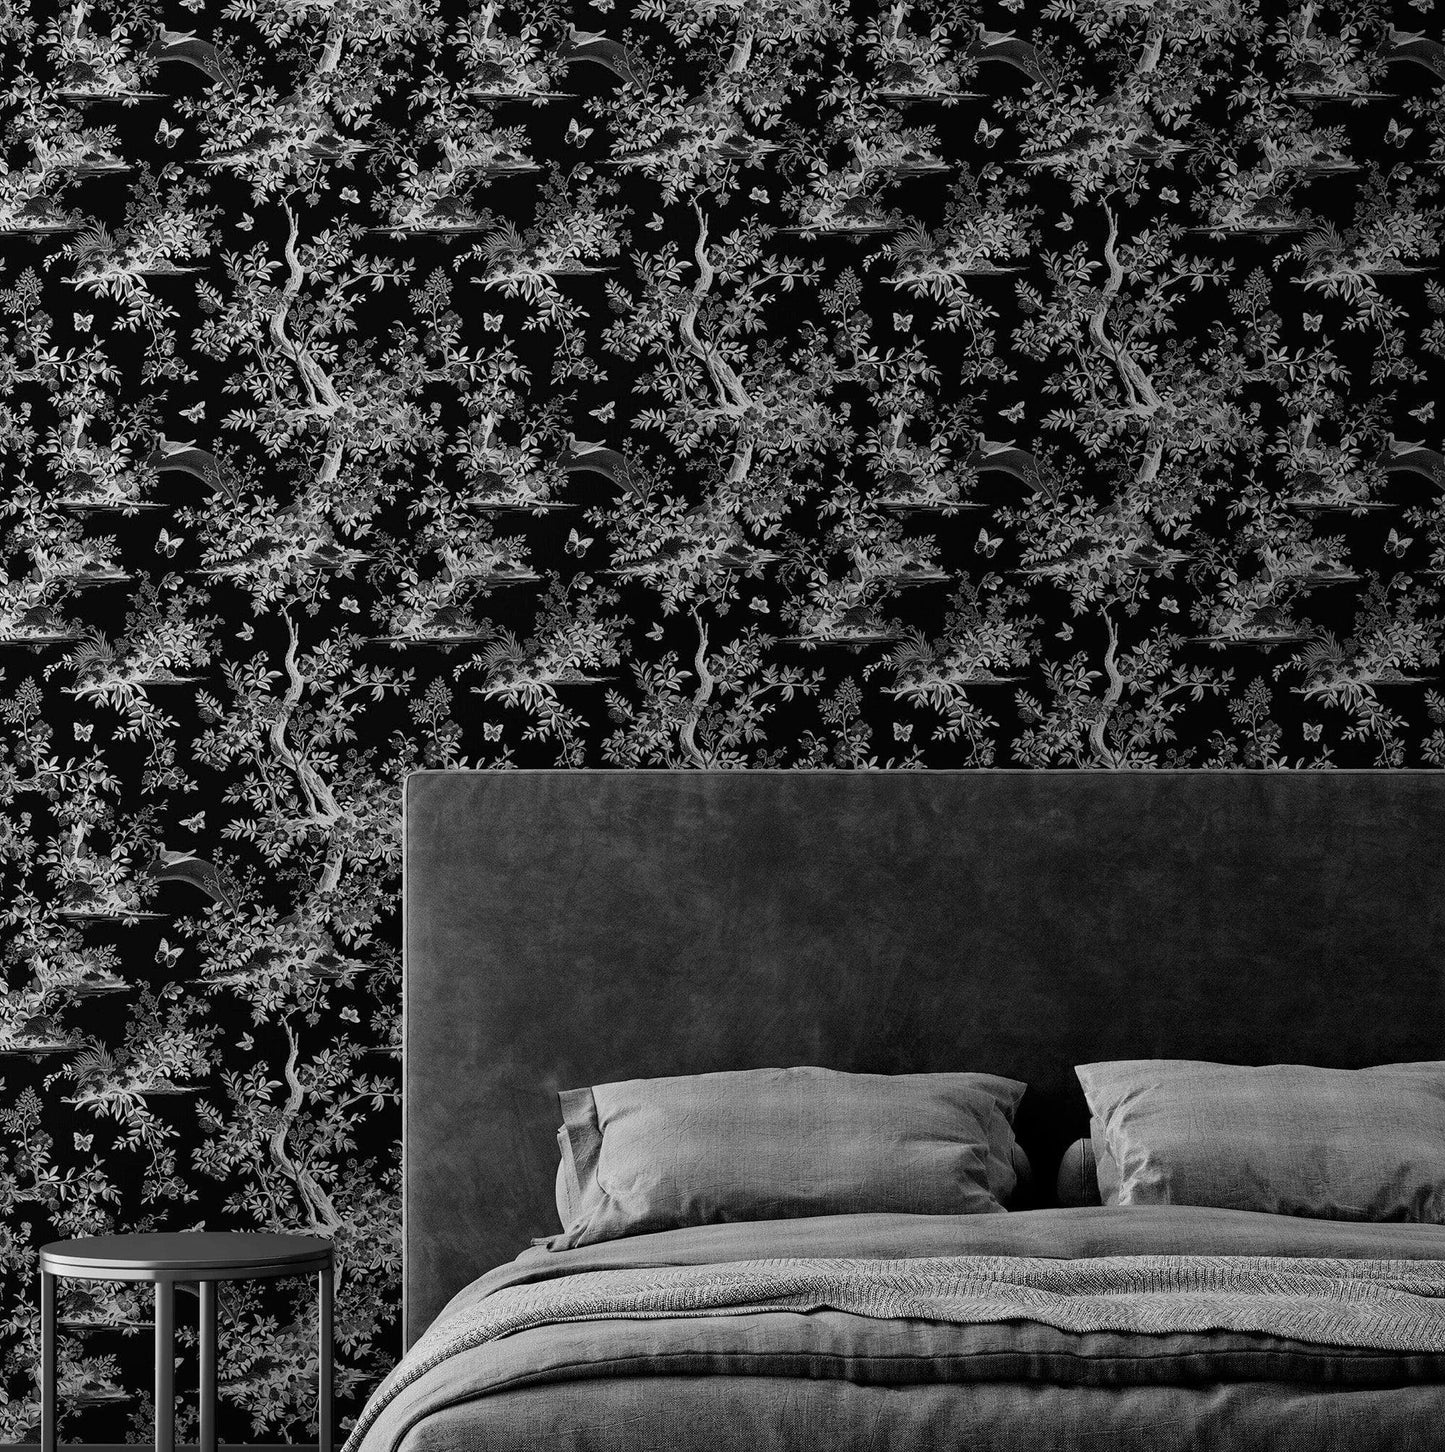 Black and White Toile De Jouy Vintage Wallpaper Mural. #6728